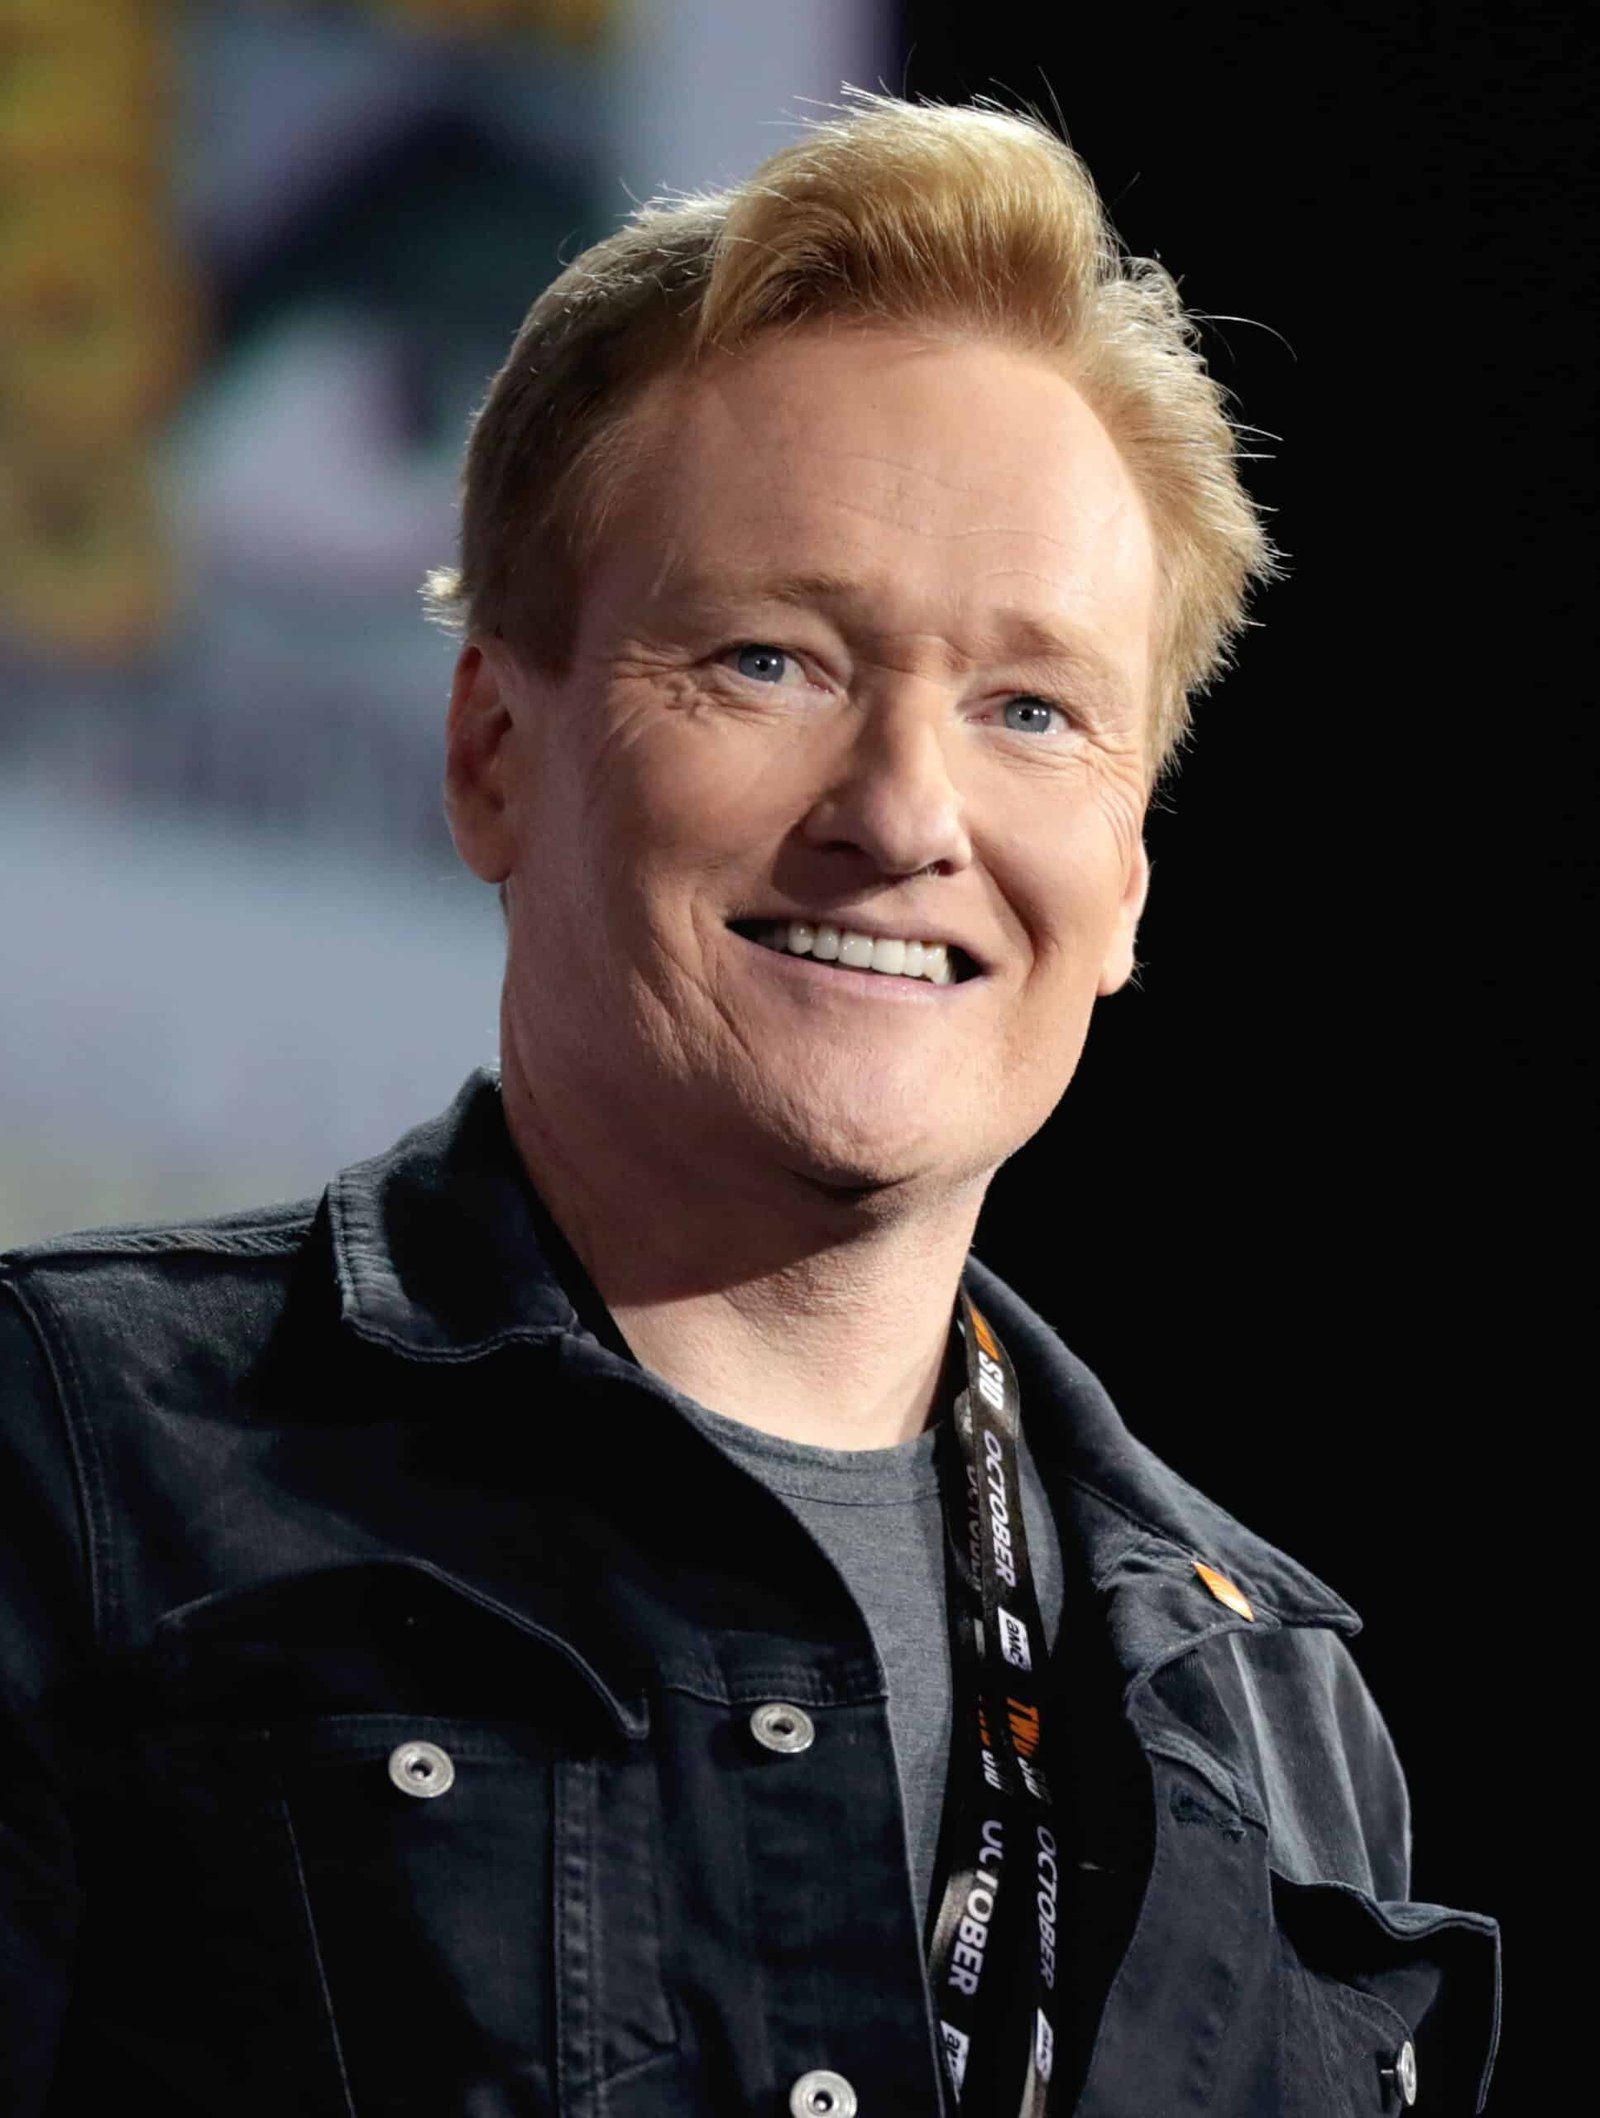 Conan O'Brien is in Murderville as a guest star